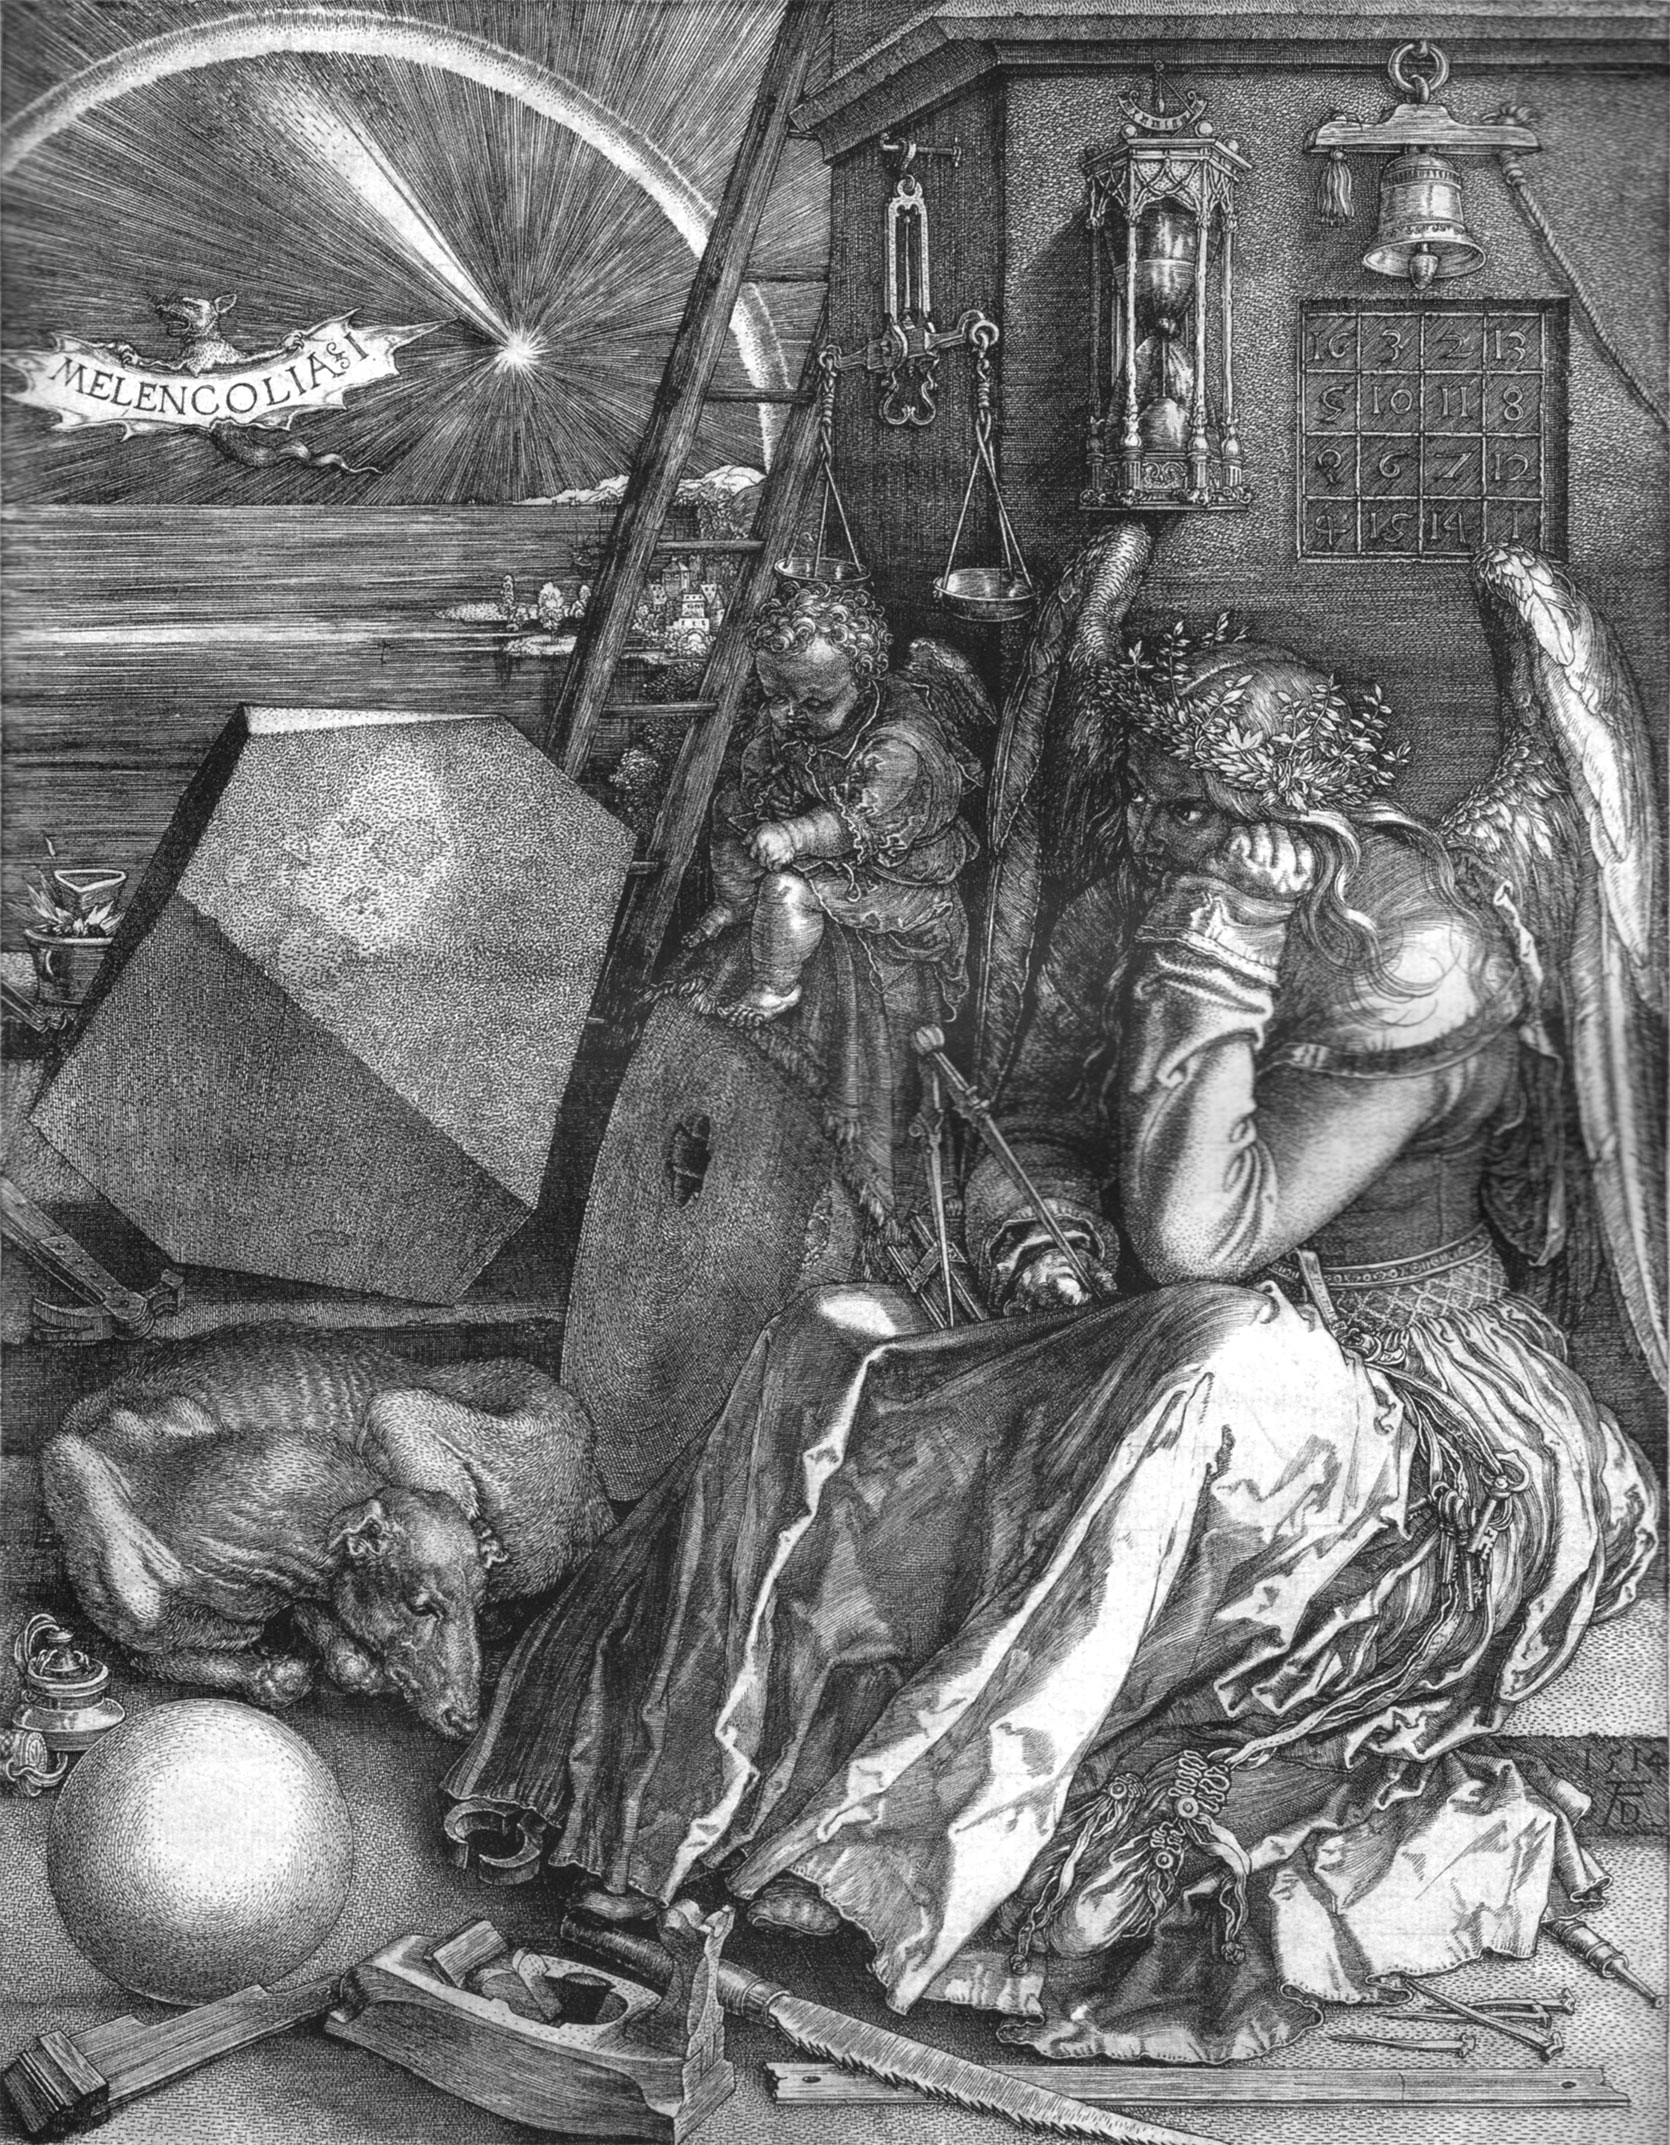 Melencolia I by Albrecht Dürer - 1514 - 24 × 18.8 cm British Museum